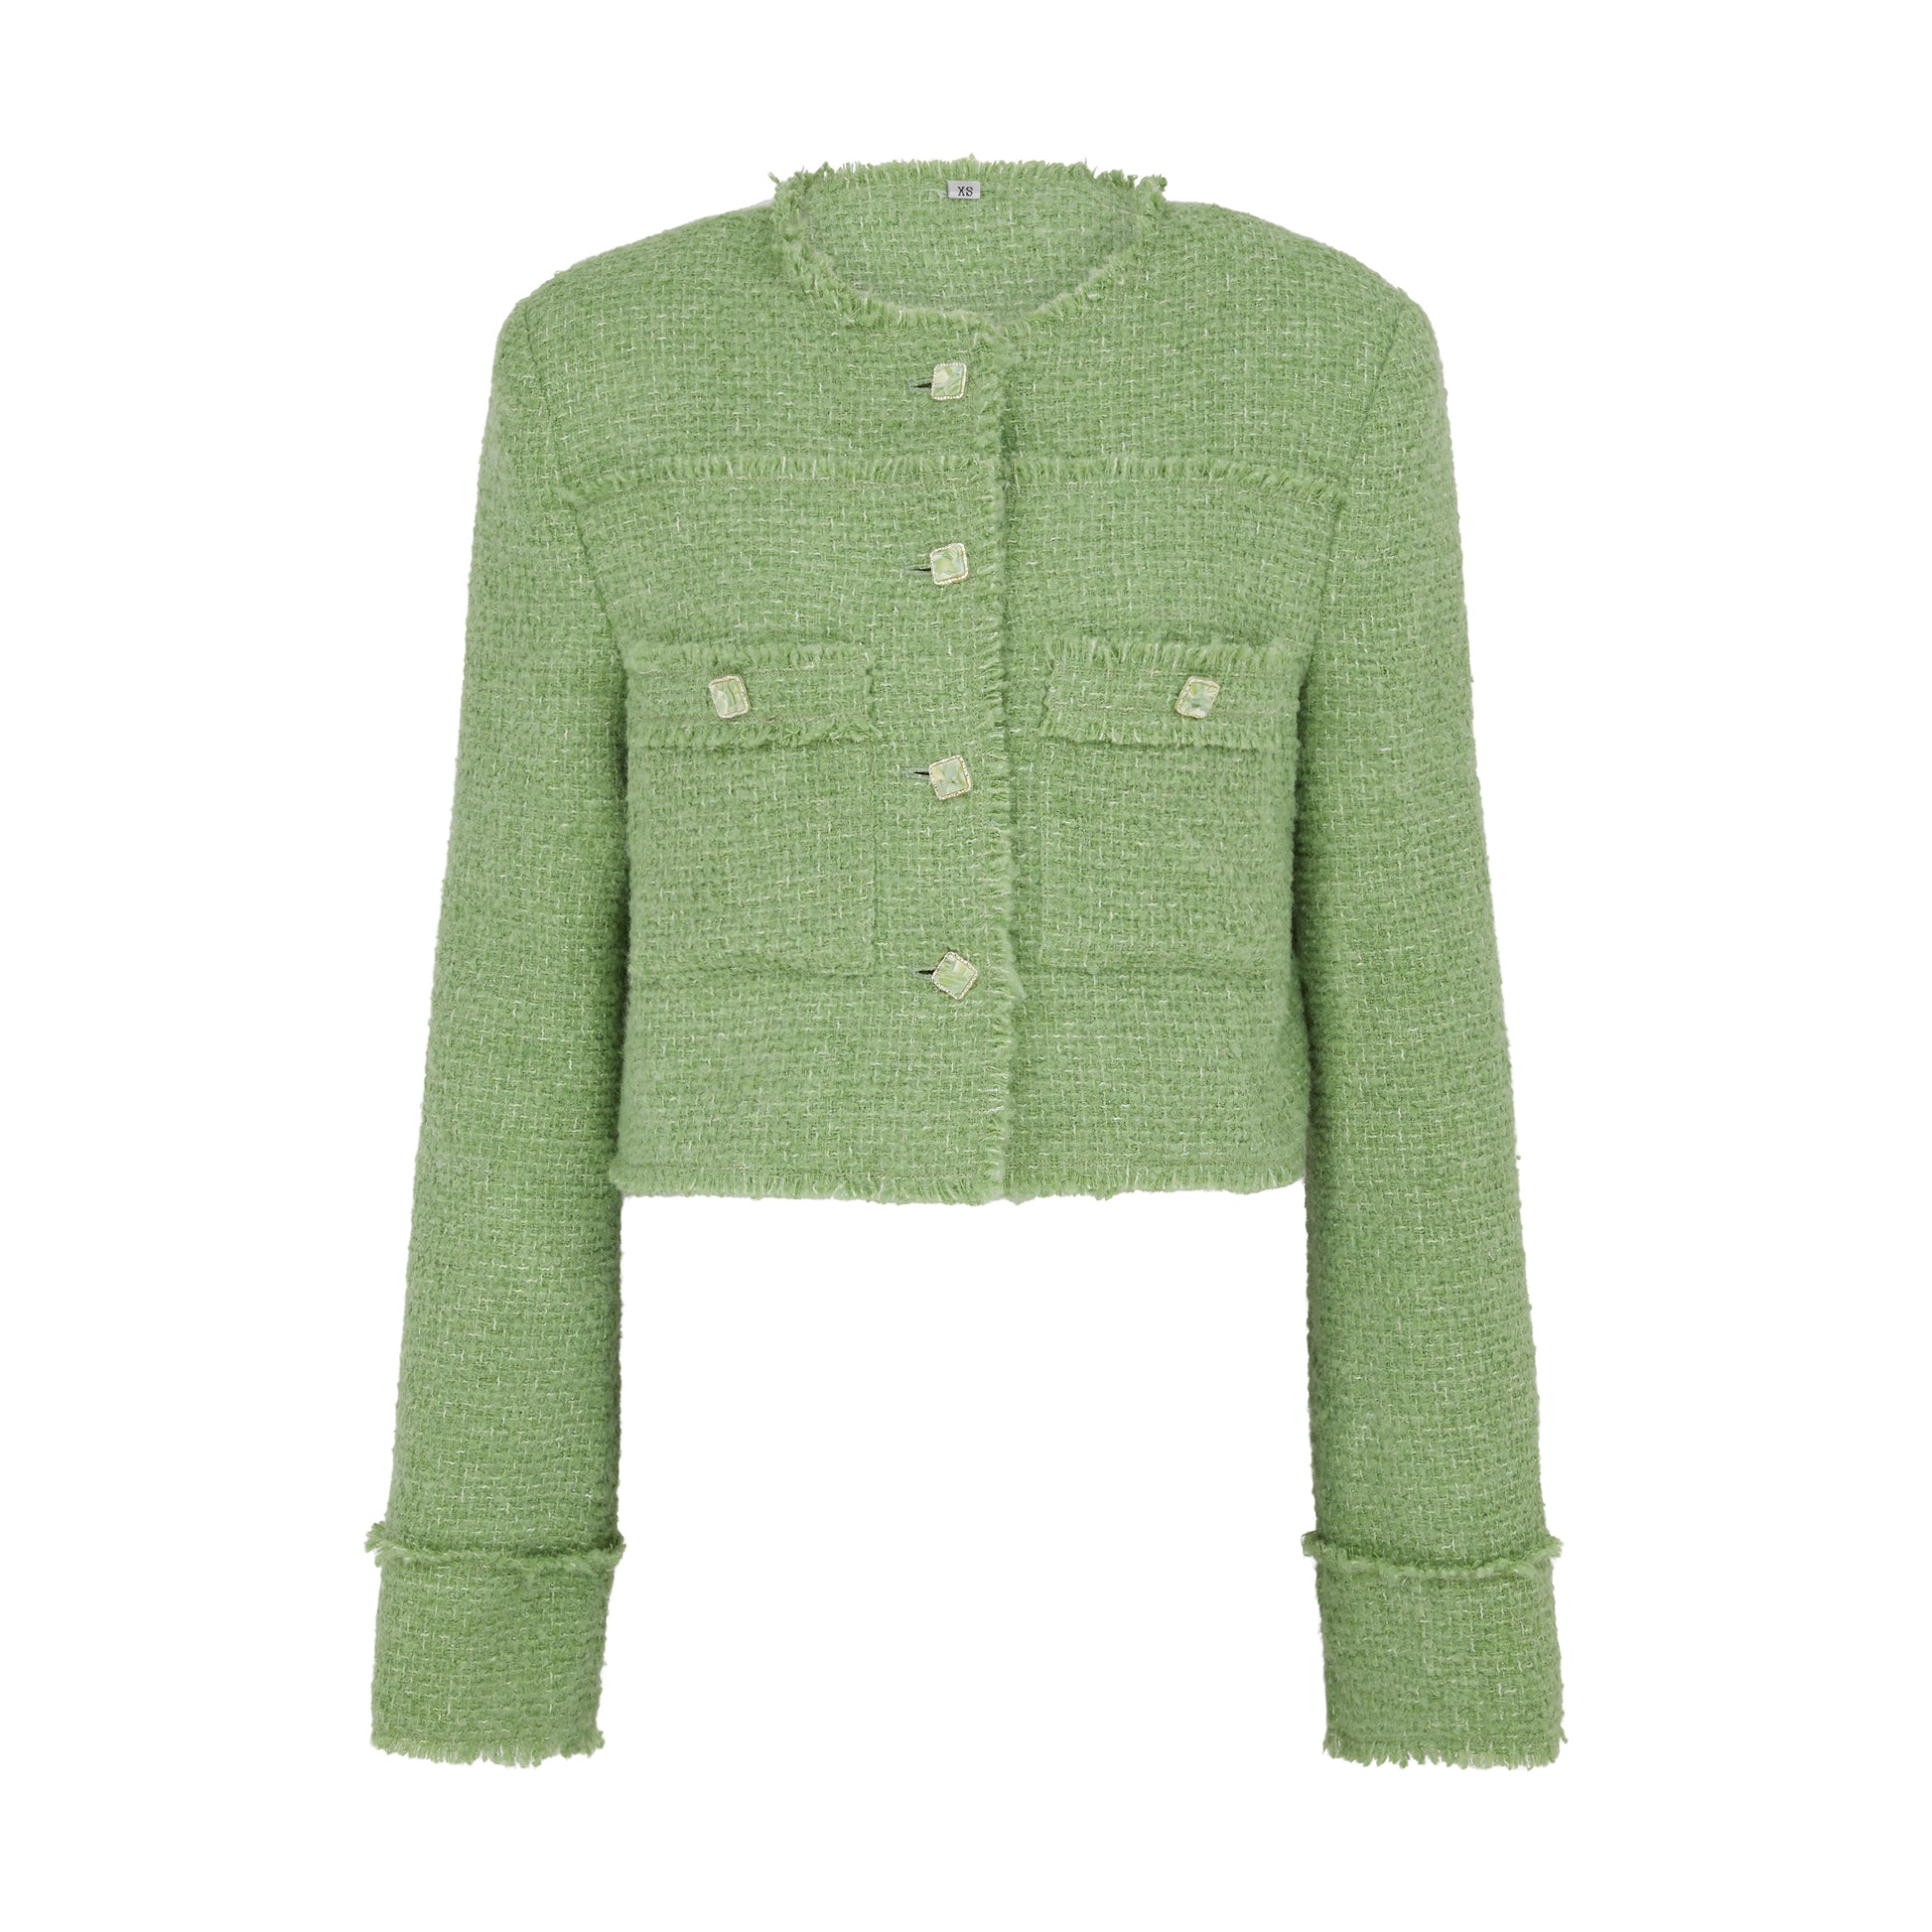 SOUR FIGS Bouclé Tweed Jacket in Pistachio Green